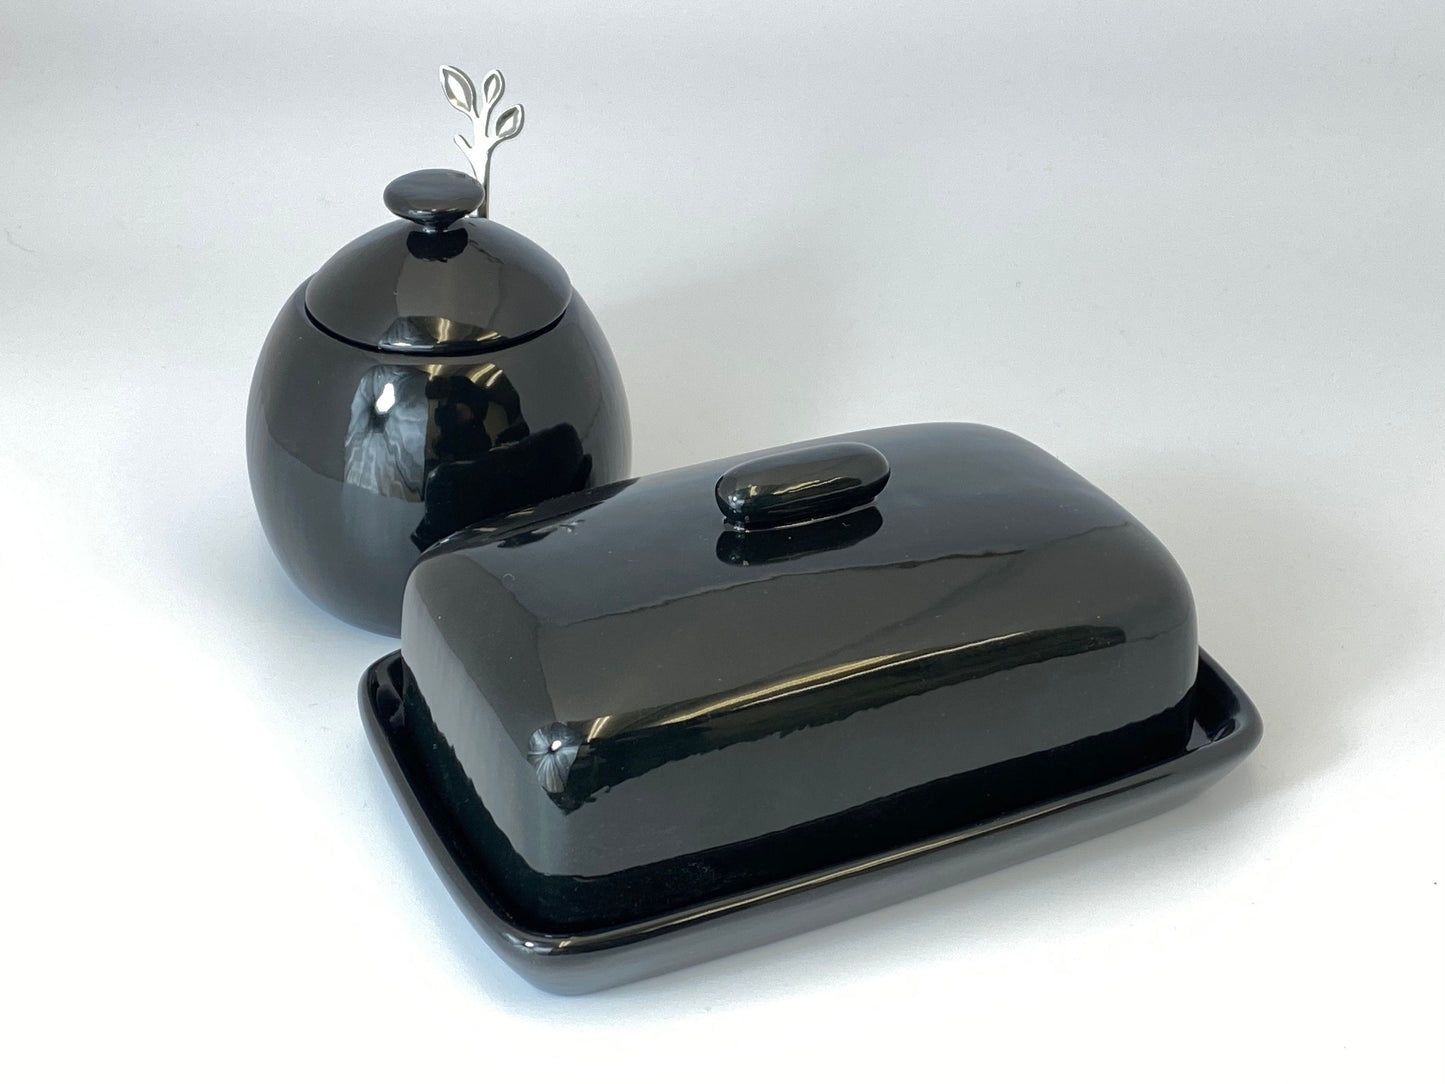 Butter Dish and Sugar Bowl Set - Jet Black Glaze - PeterBowenArt